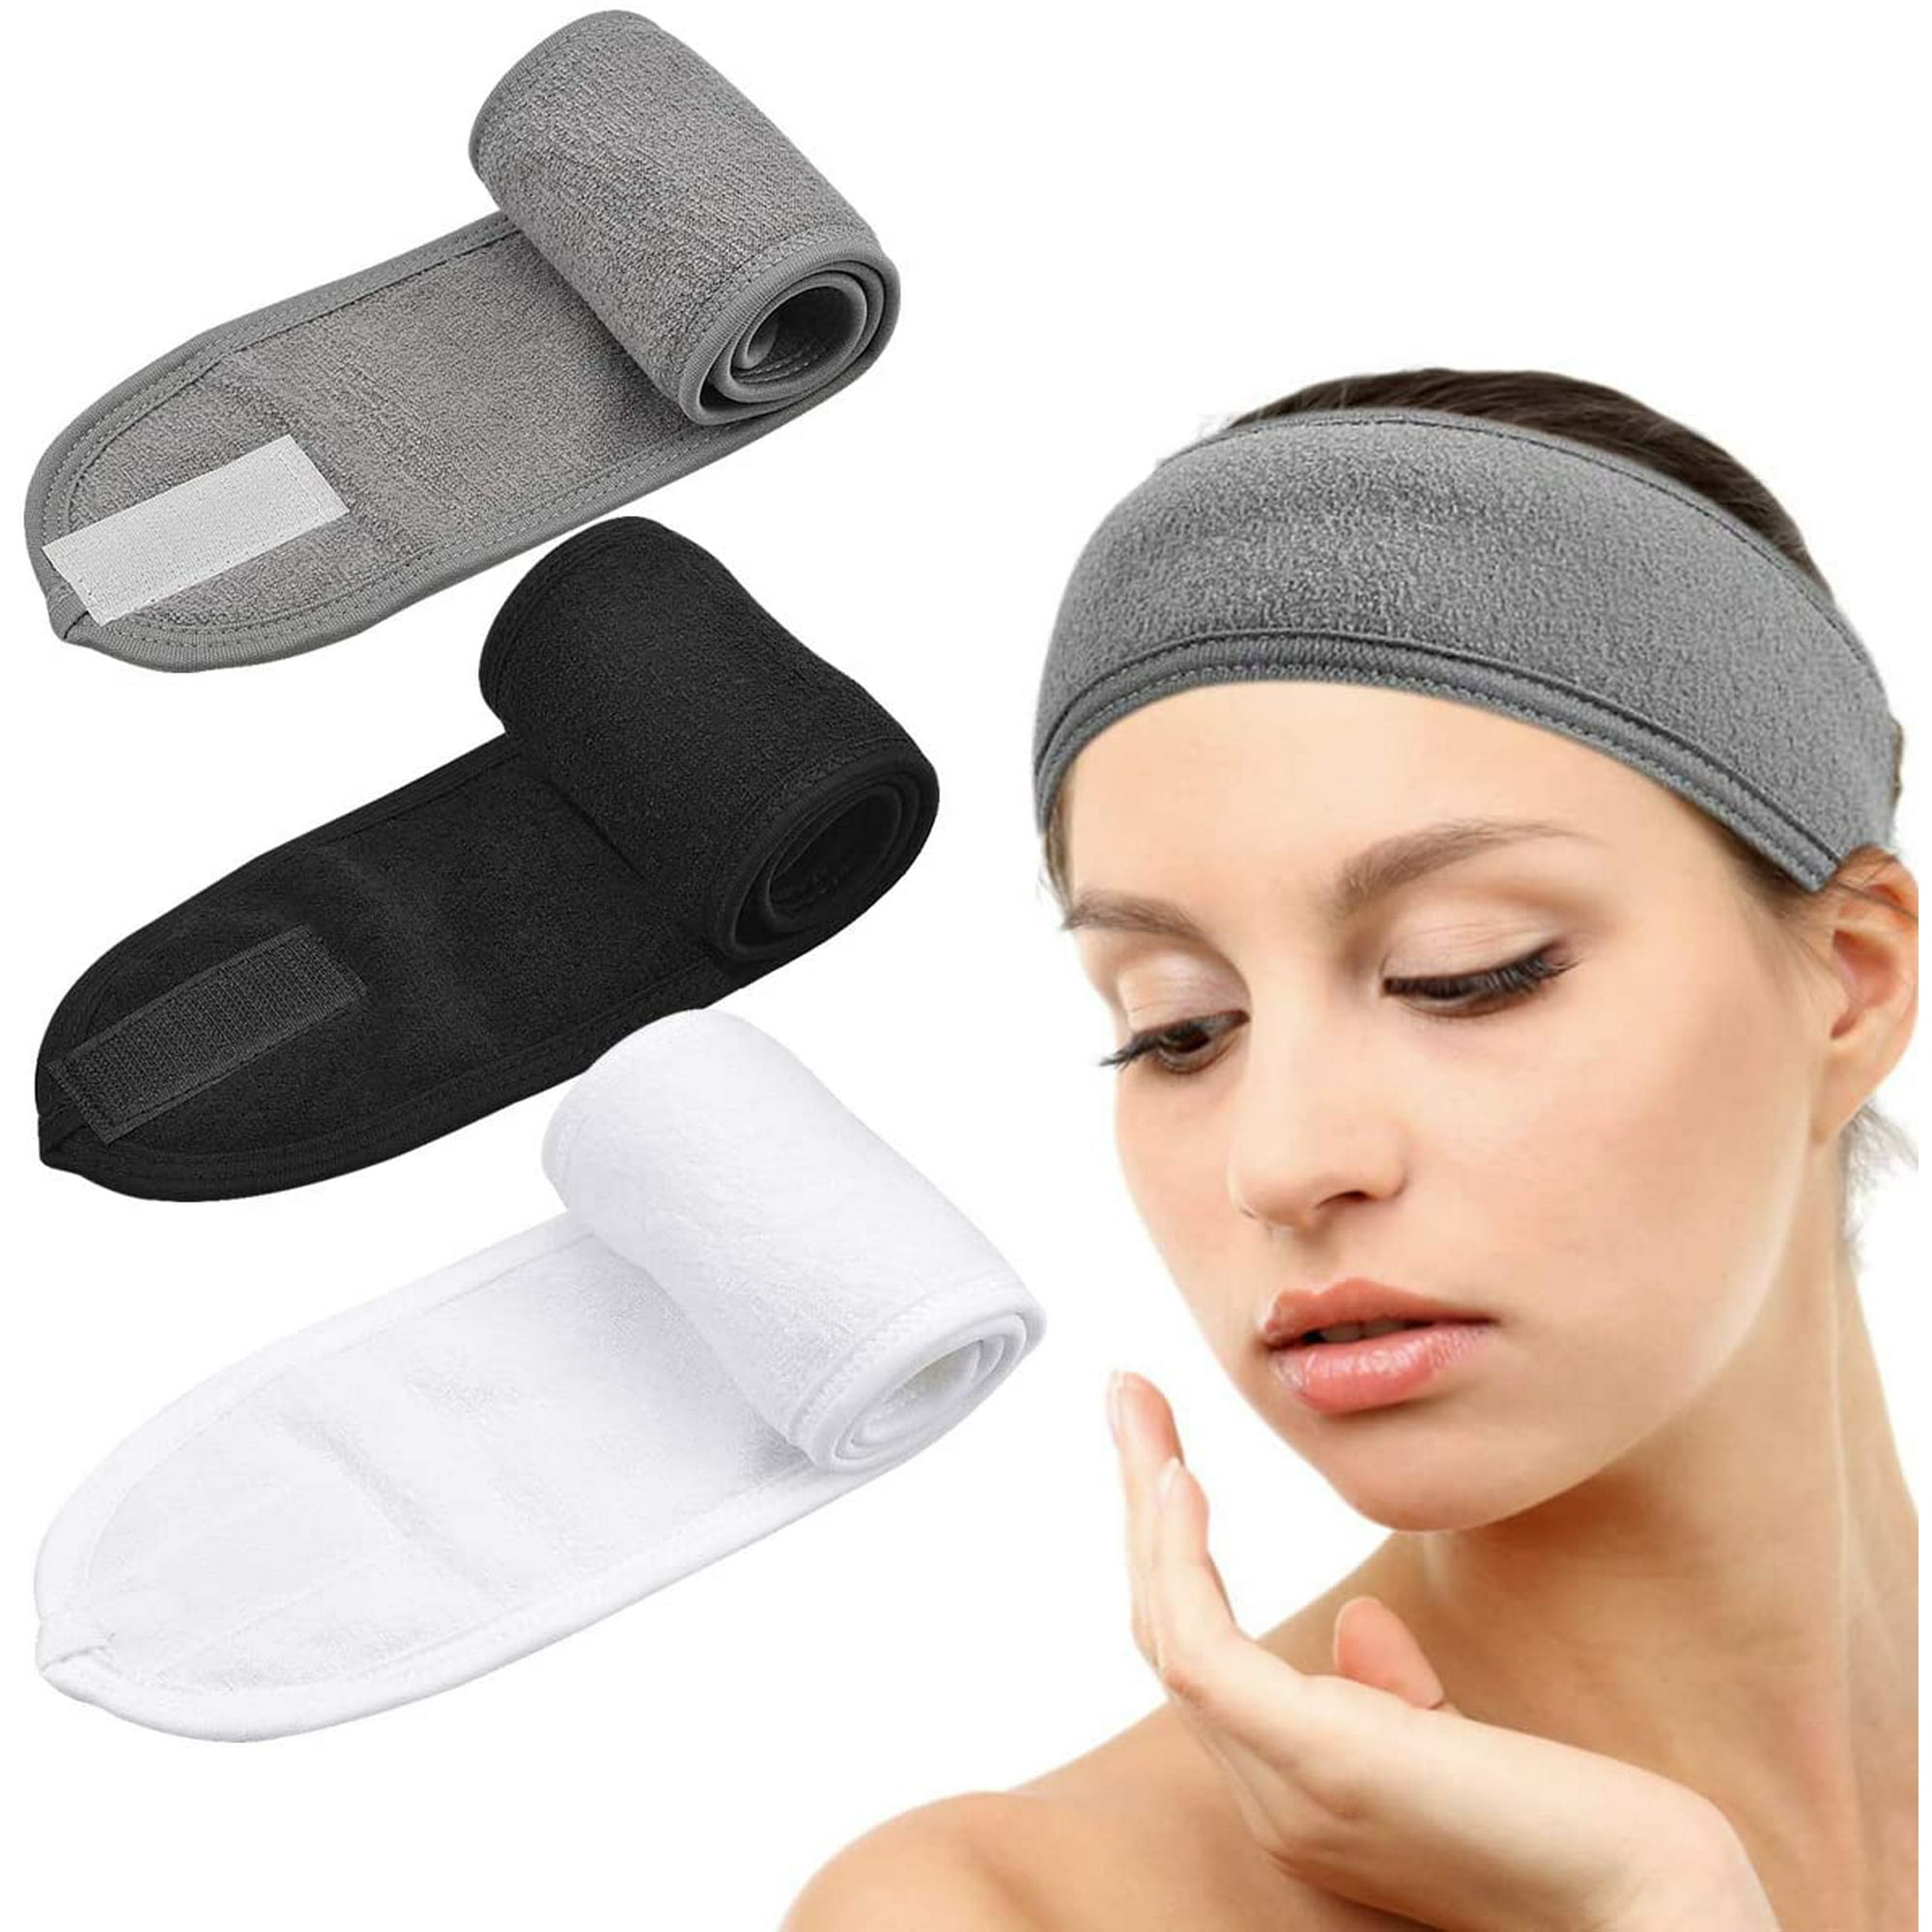 Adjustable Makeup Head Band Hair Wrap Shower Cap Band Hairband Convenient Magic